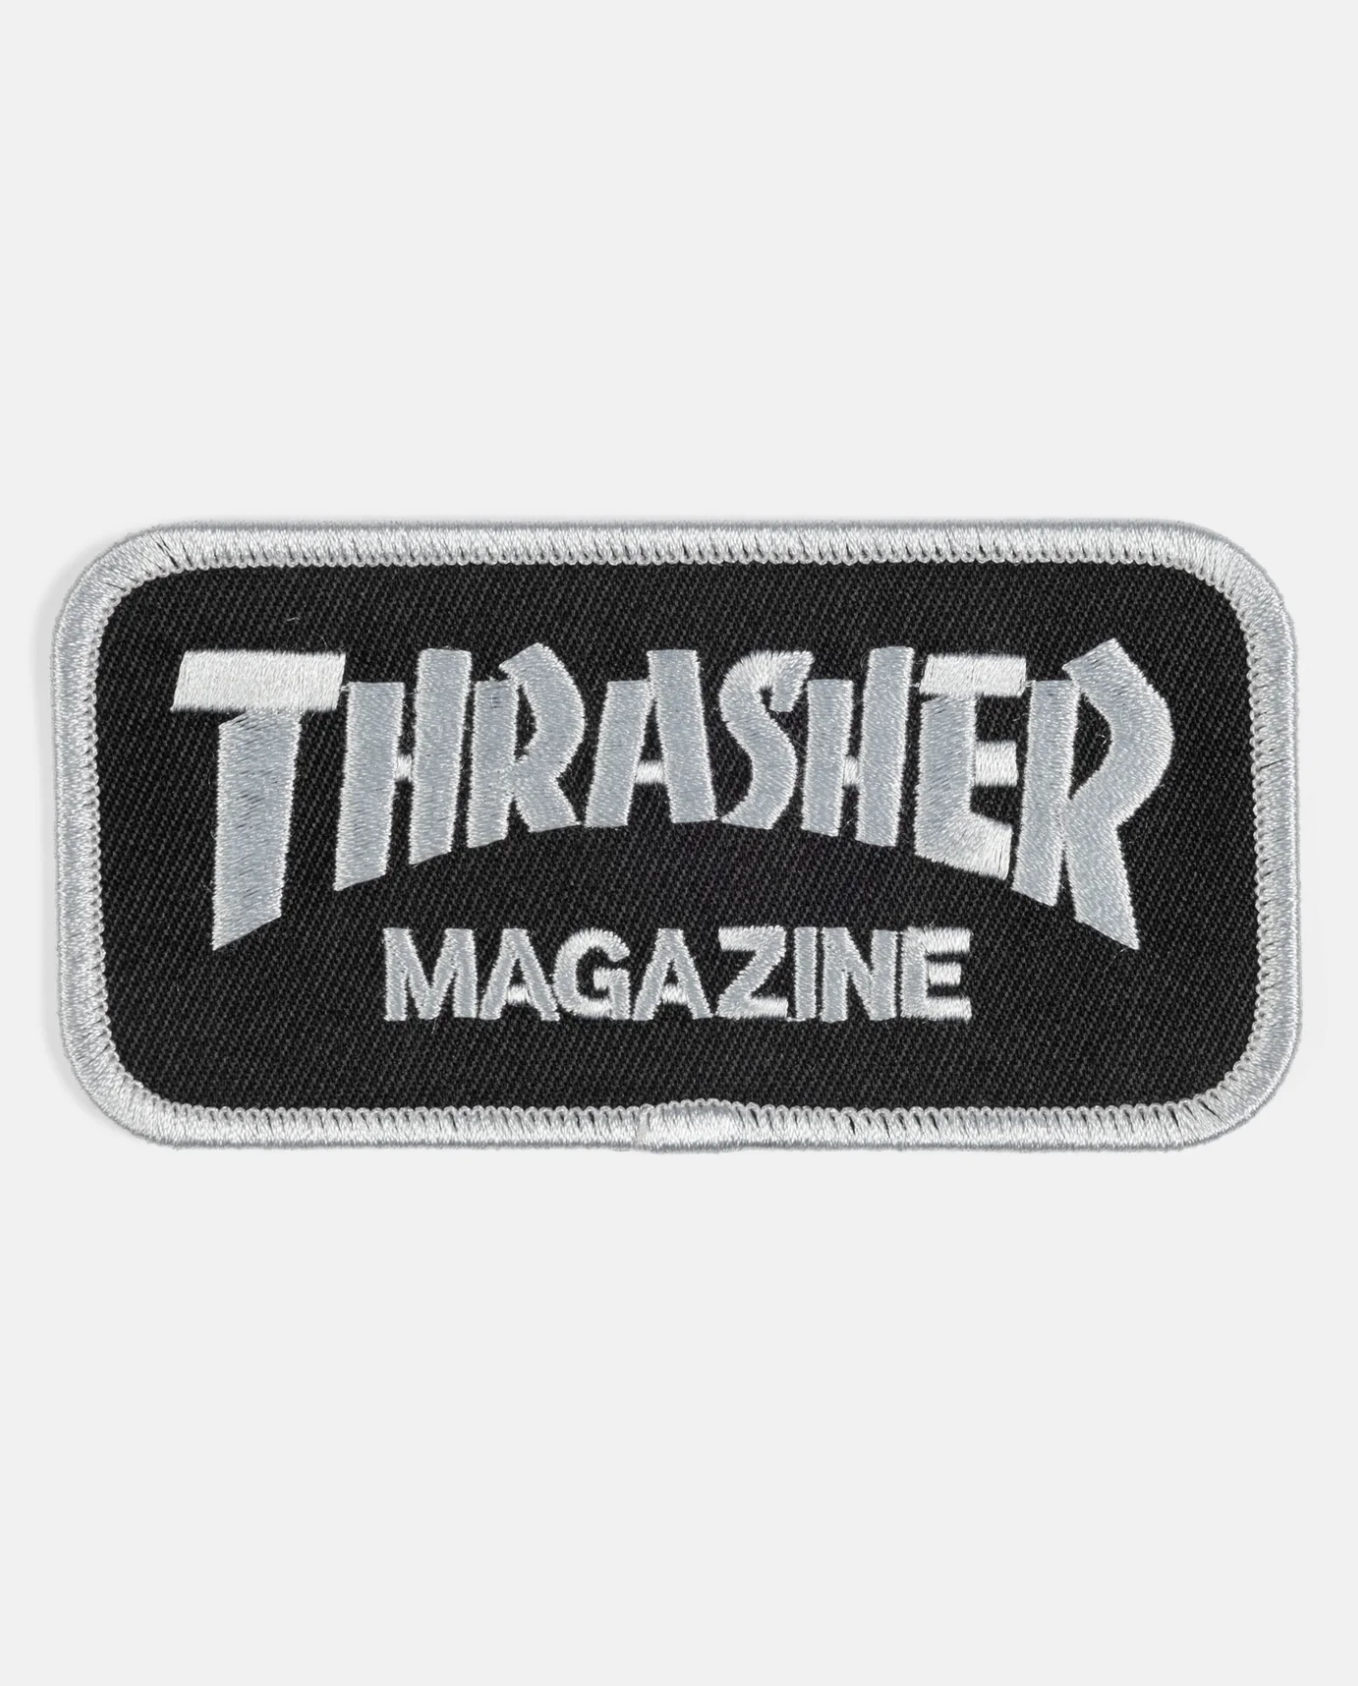 Thrasher Patch - Black